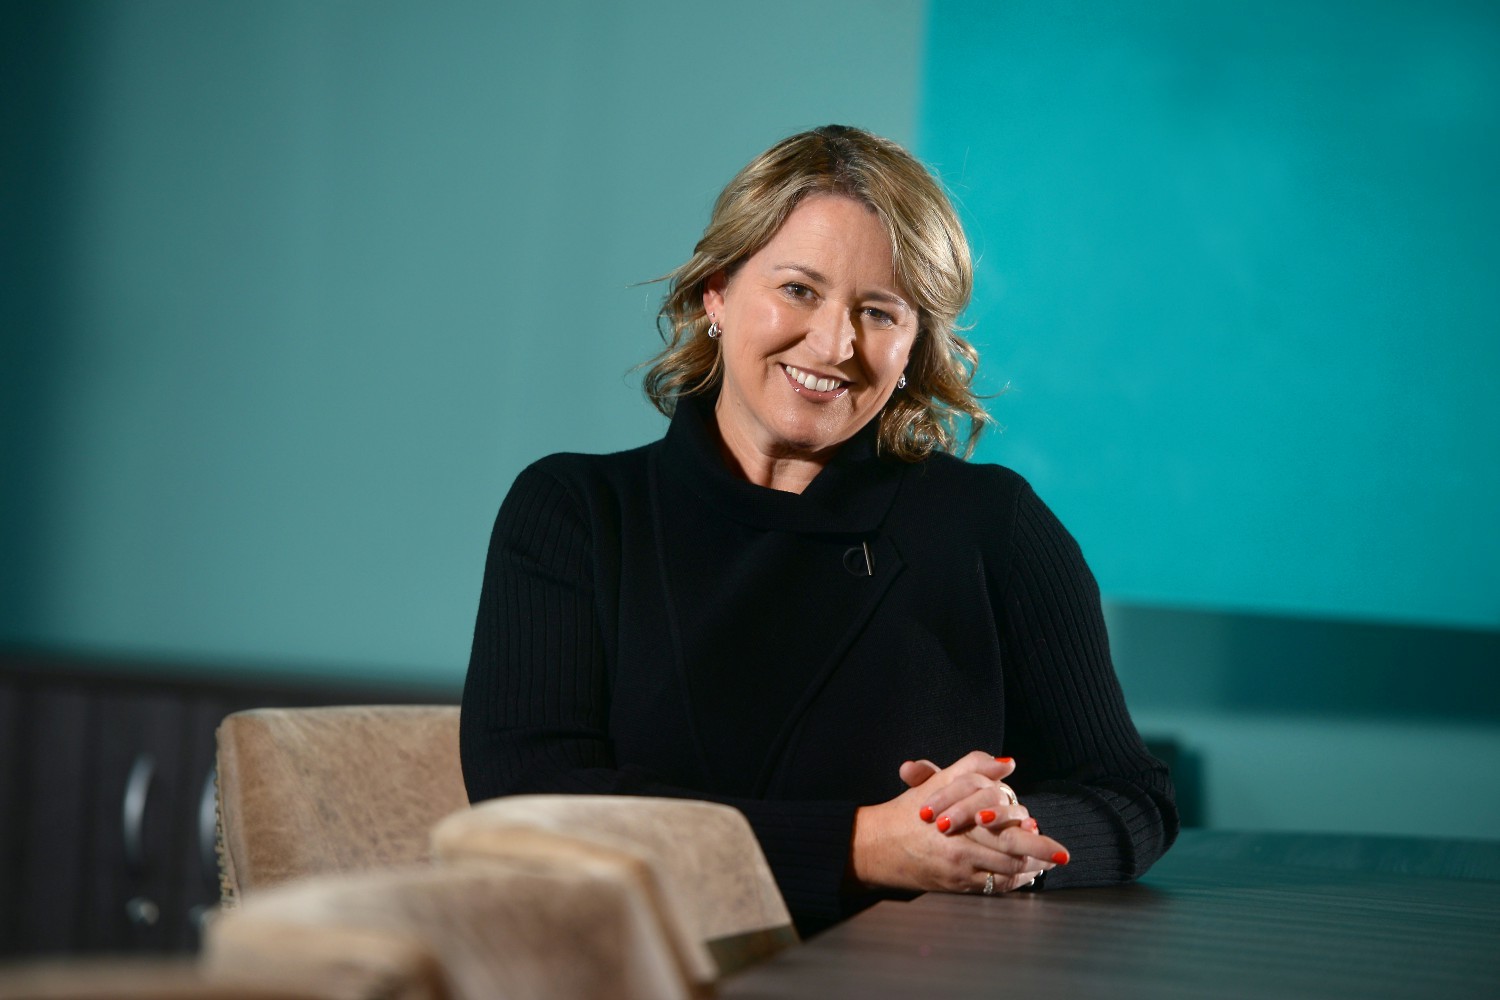 Moneypenny Group CEO, Joanna Swash